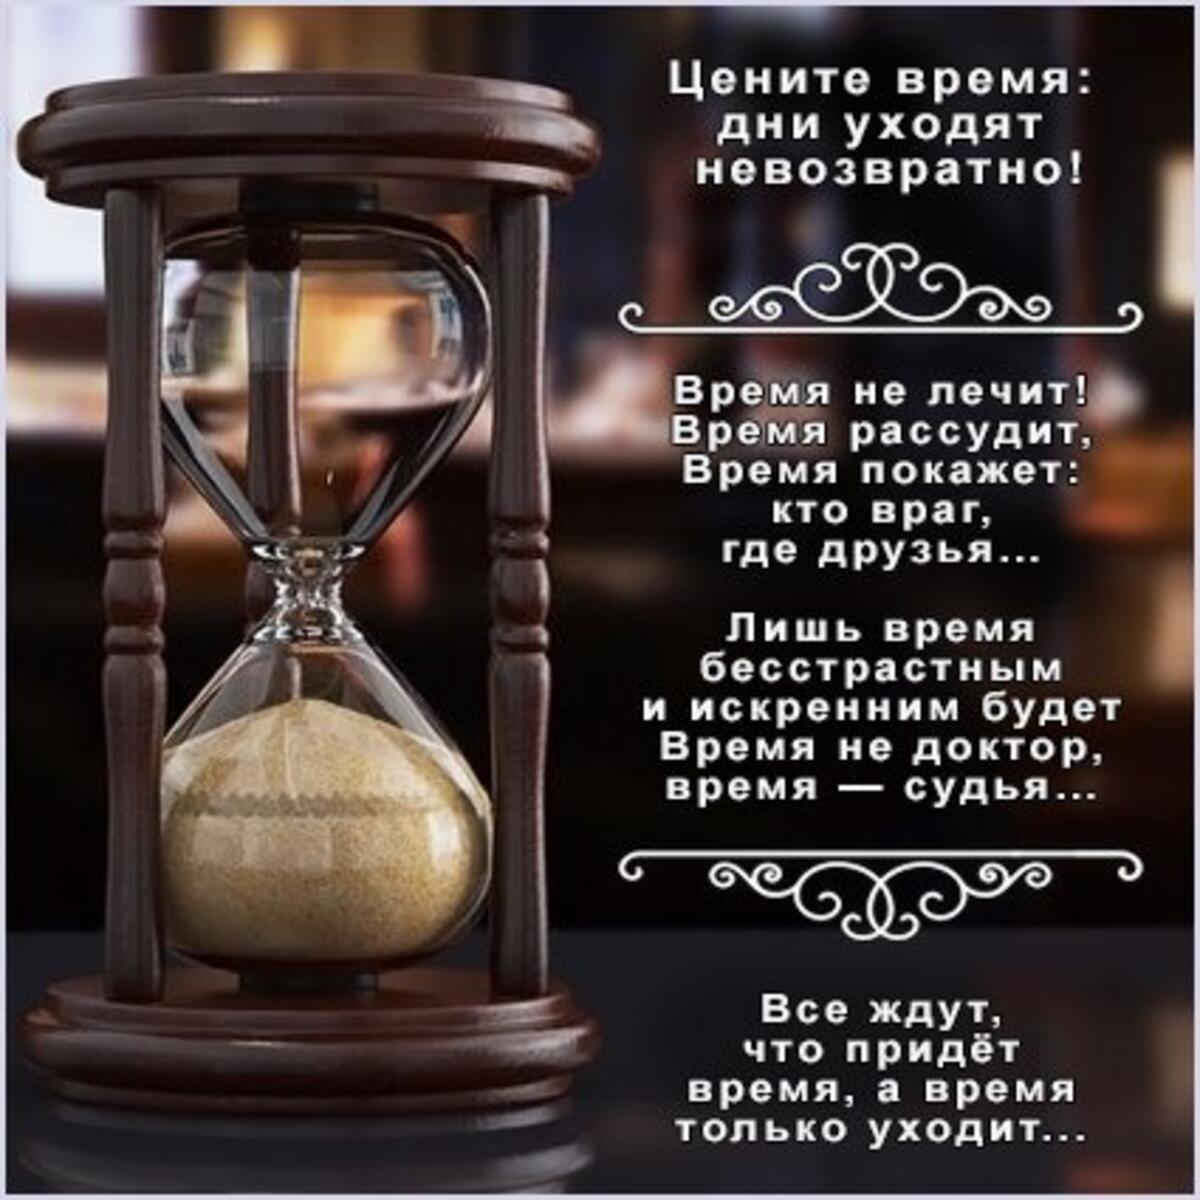 Текст цените время. Цените время. Цените время дни уходят. Цените время дни уходят безвозвратно. Дорожите временем.